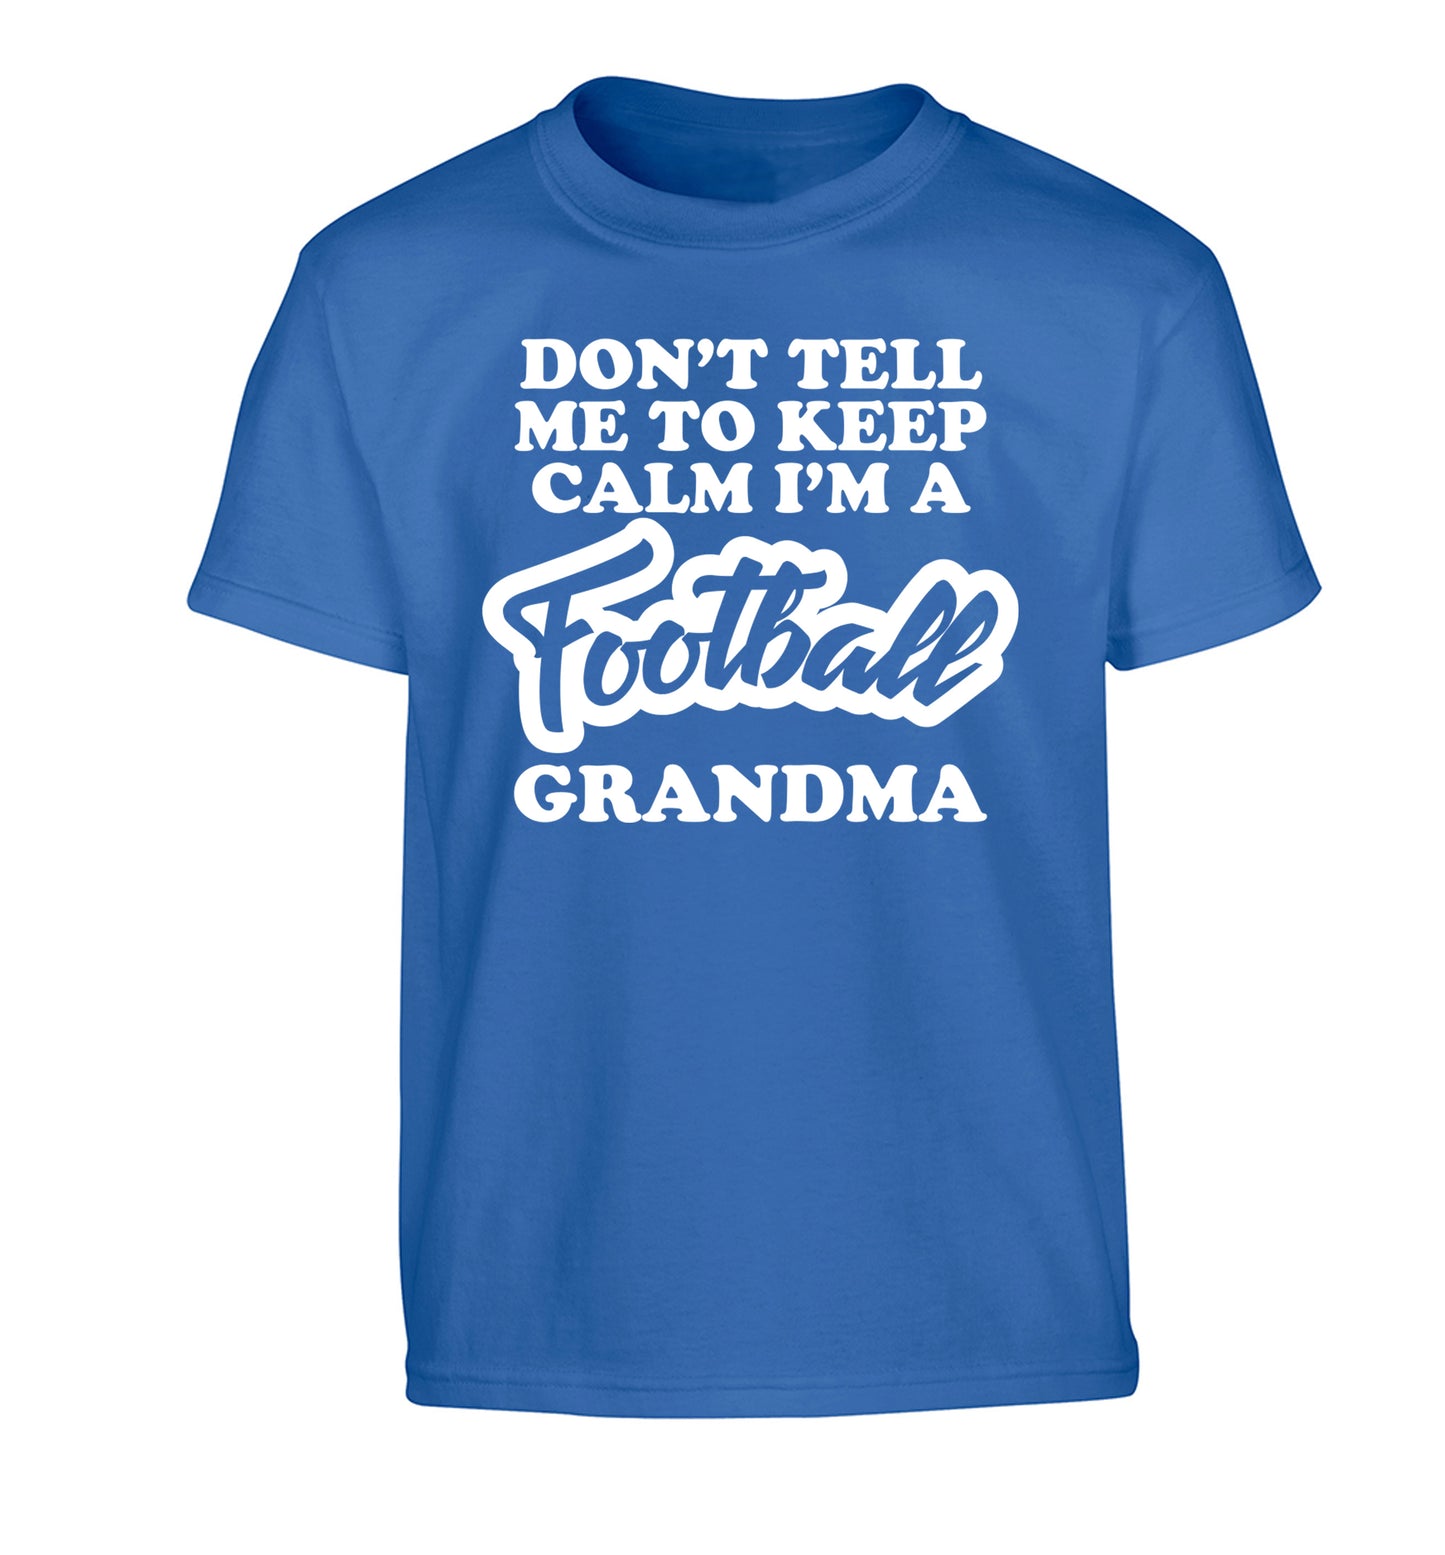 Don't tell me to keep calm I'm a football grandma Children's blue Tshirt 12-14 Years